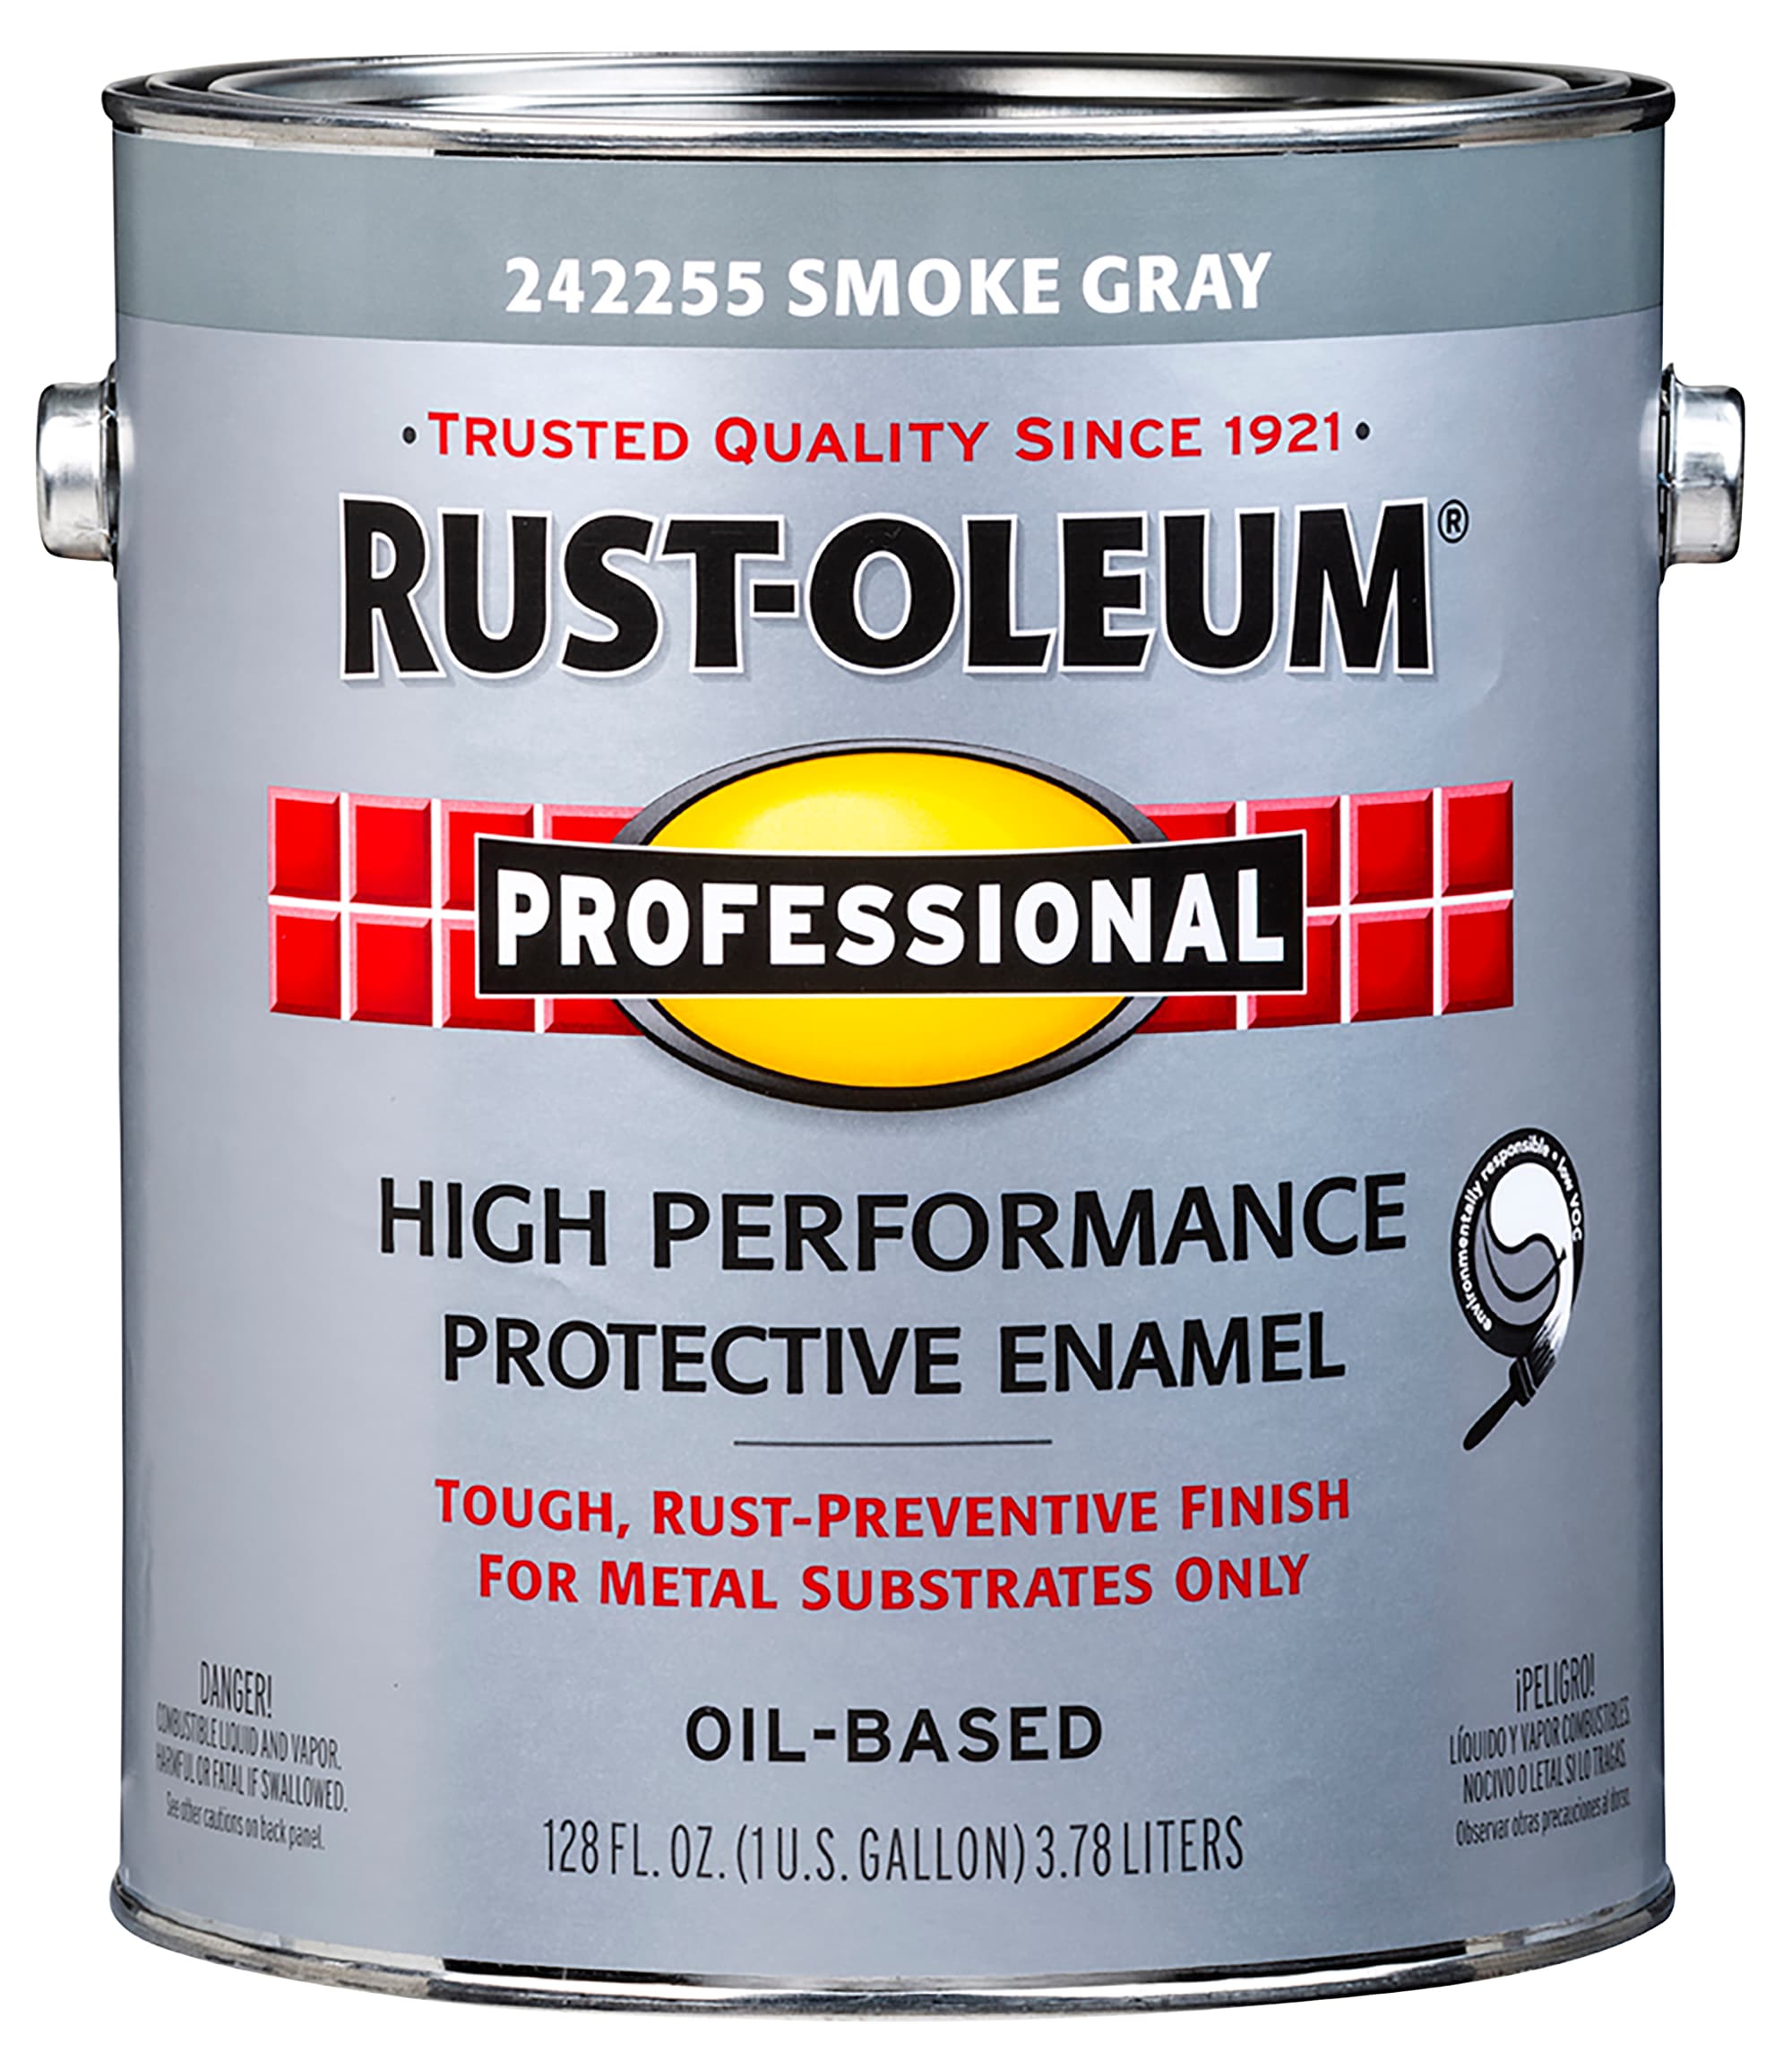 Rust-Oleum Stops Rust 12 oz Aerosol Can Smoke Gray Rust Prevention